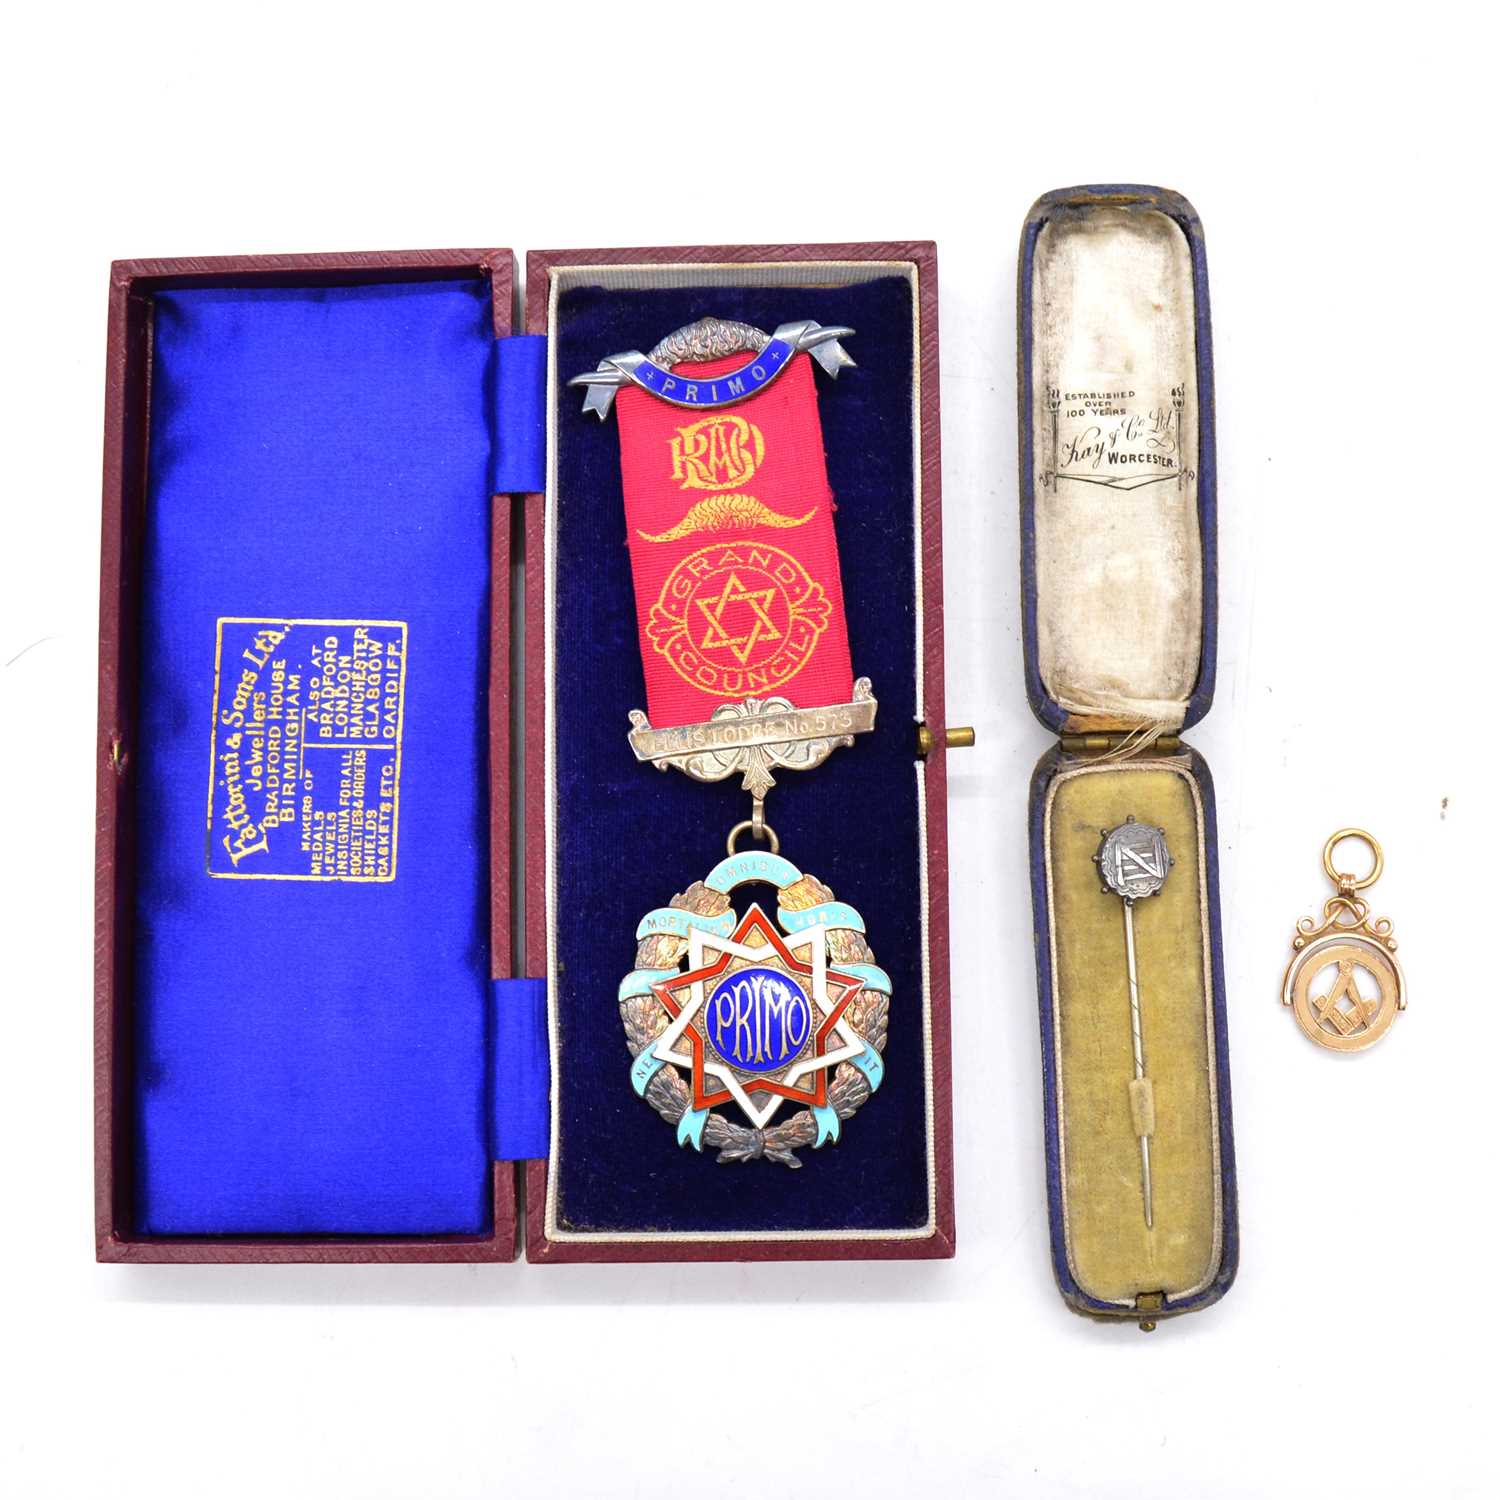 Lot 266 - Order of Buffalo silver and enamel jewel, 9 carat gold masonic pendant and a stick pin.